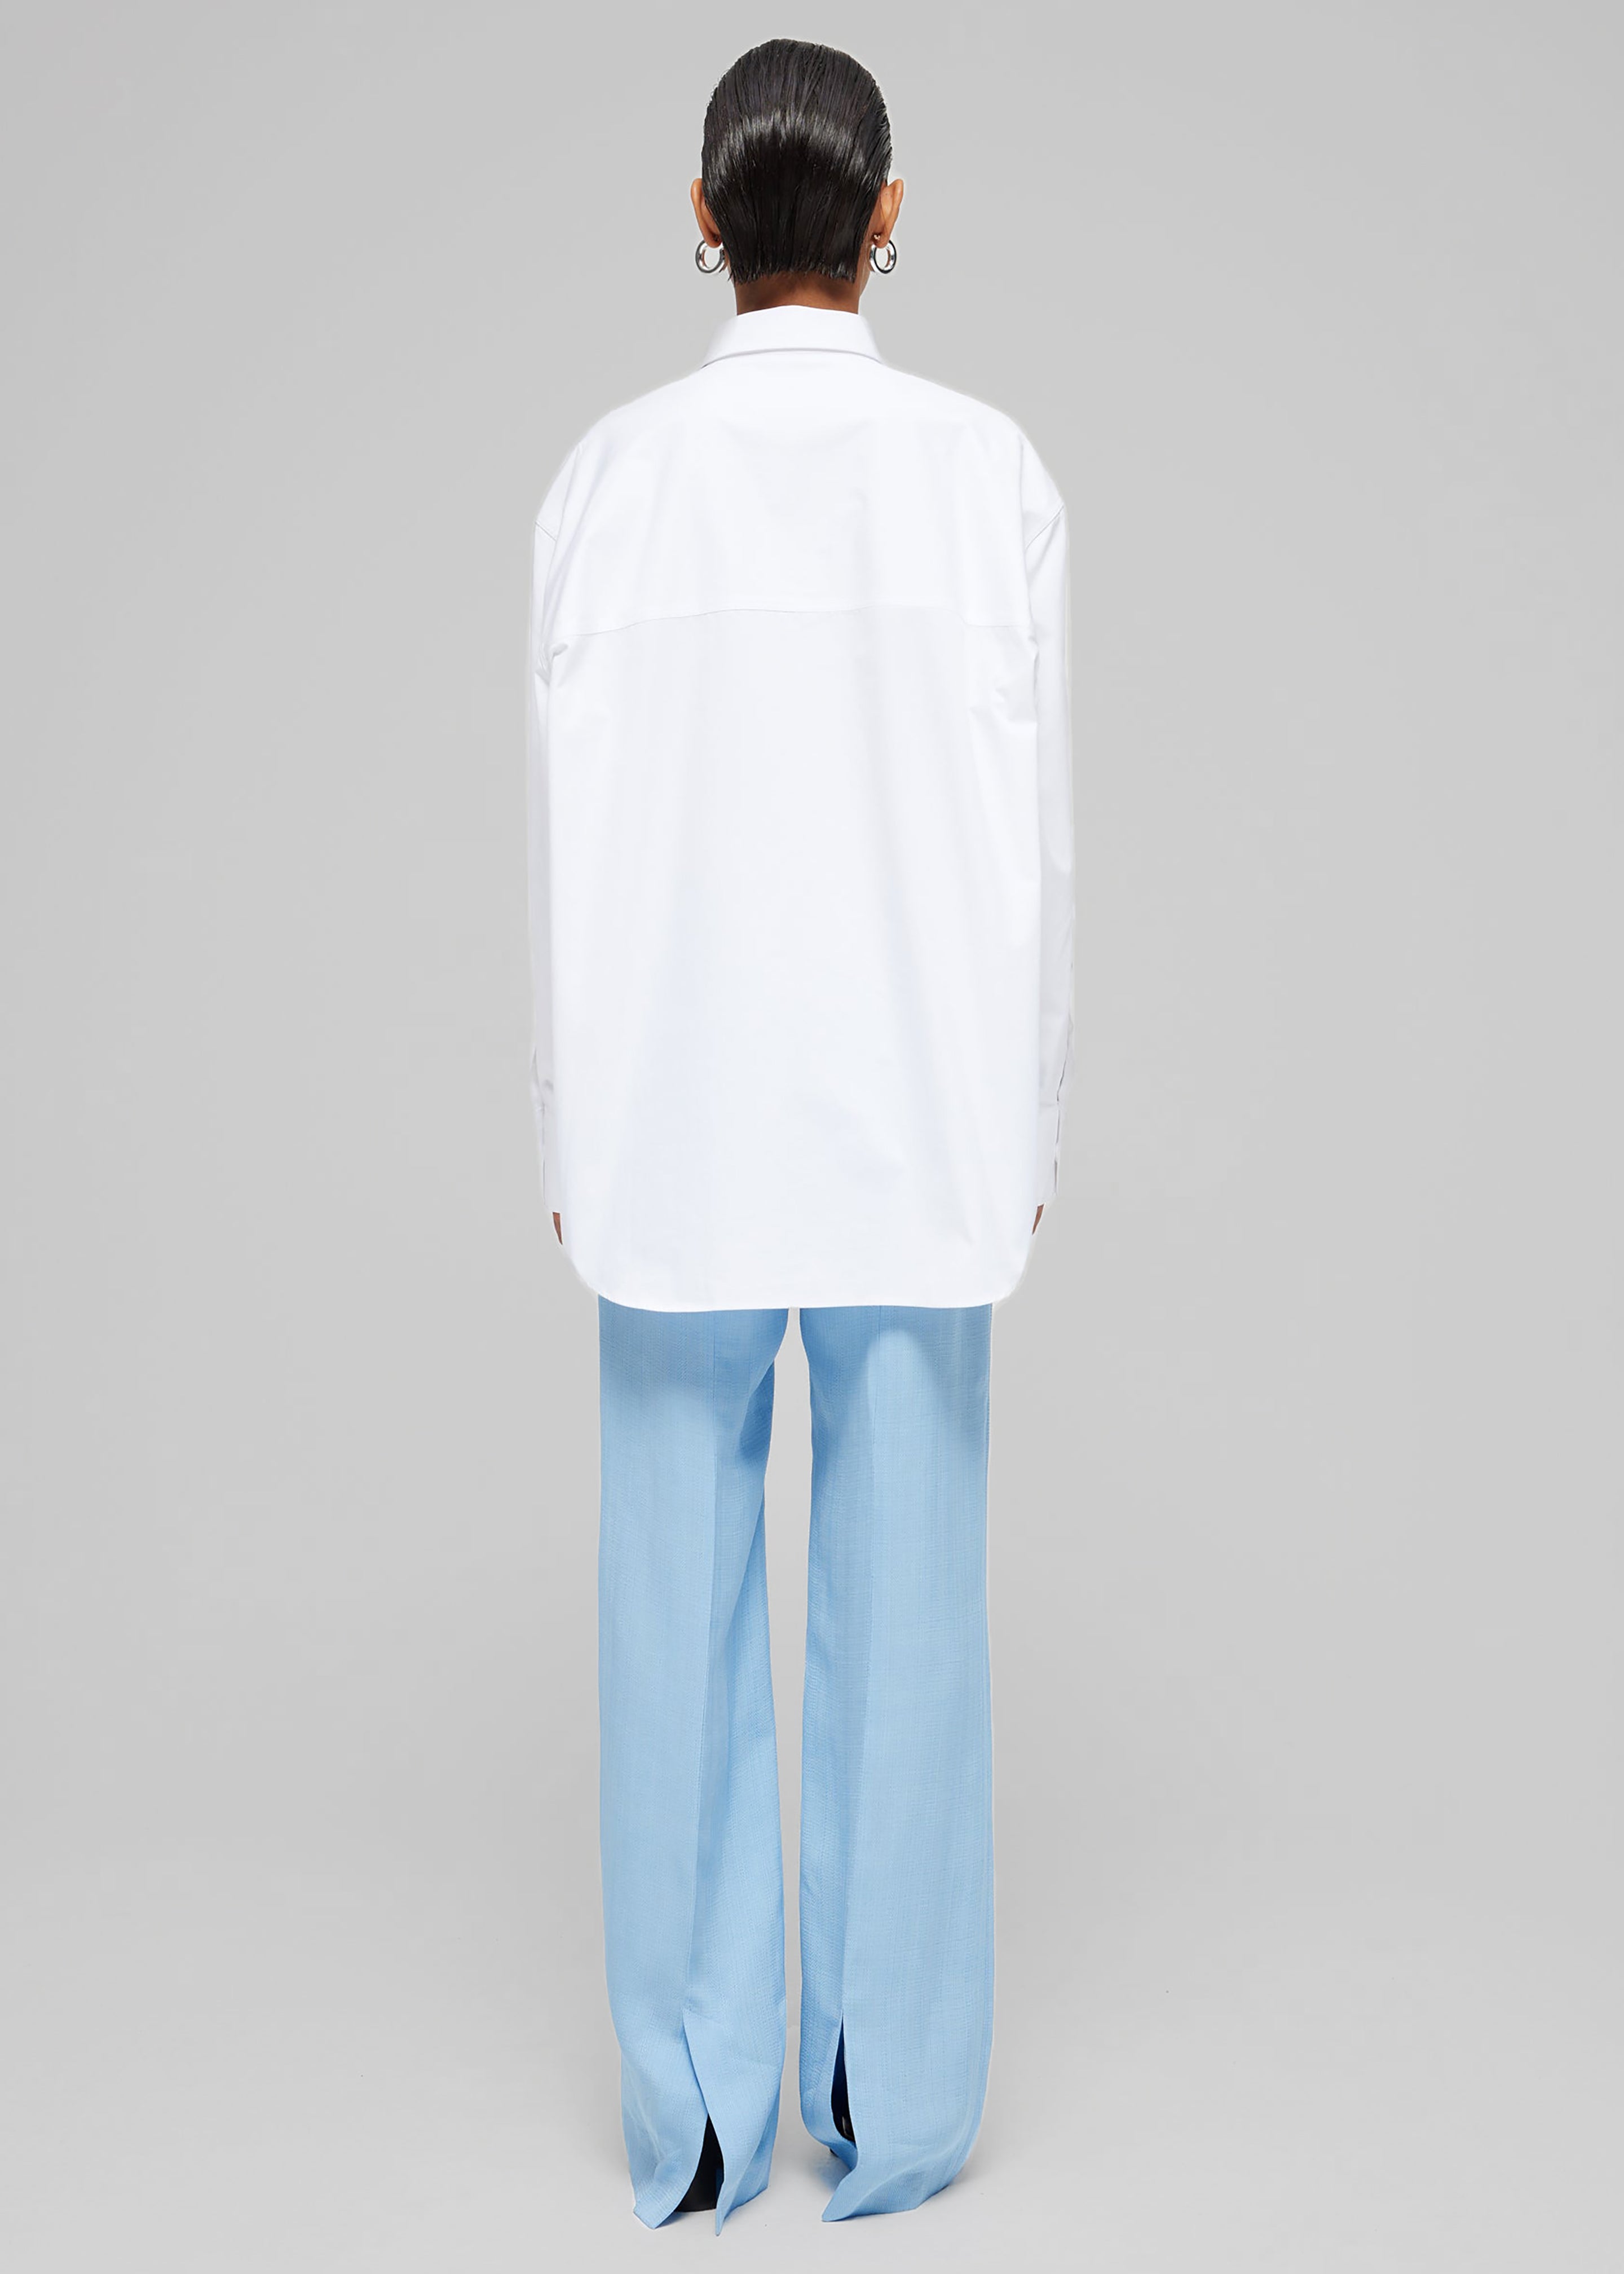 Róhe Unisex Classic Shirt - White - 9